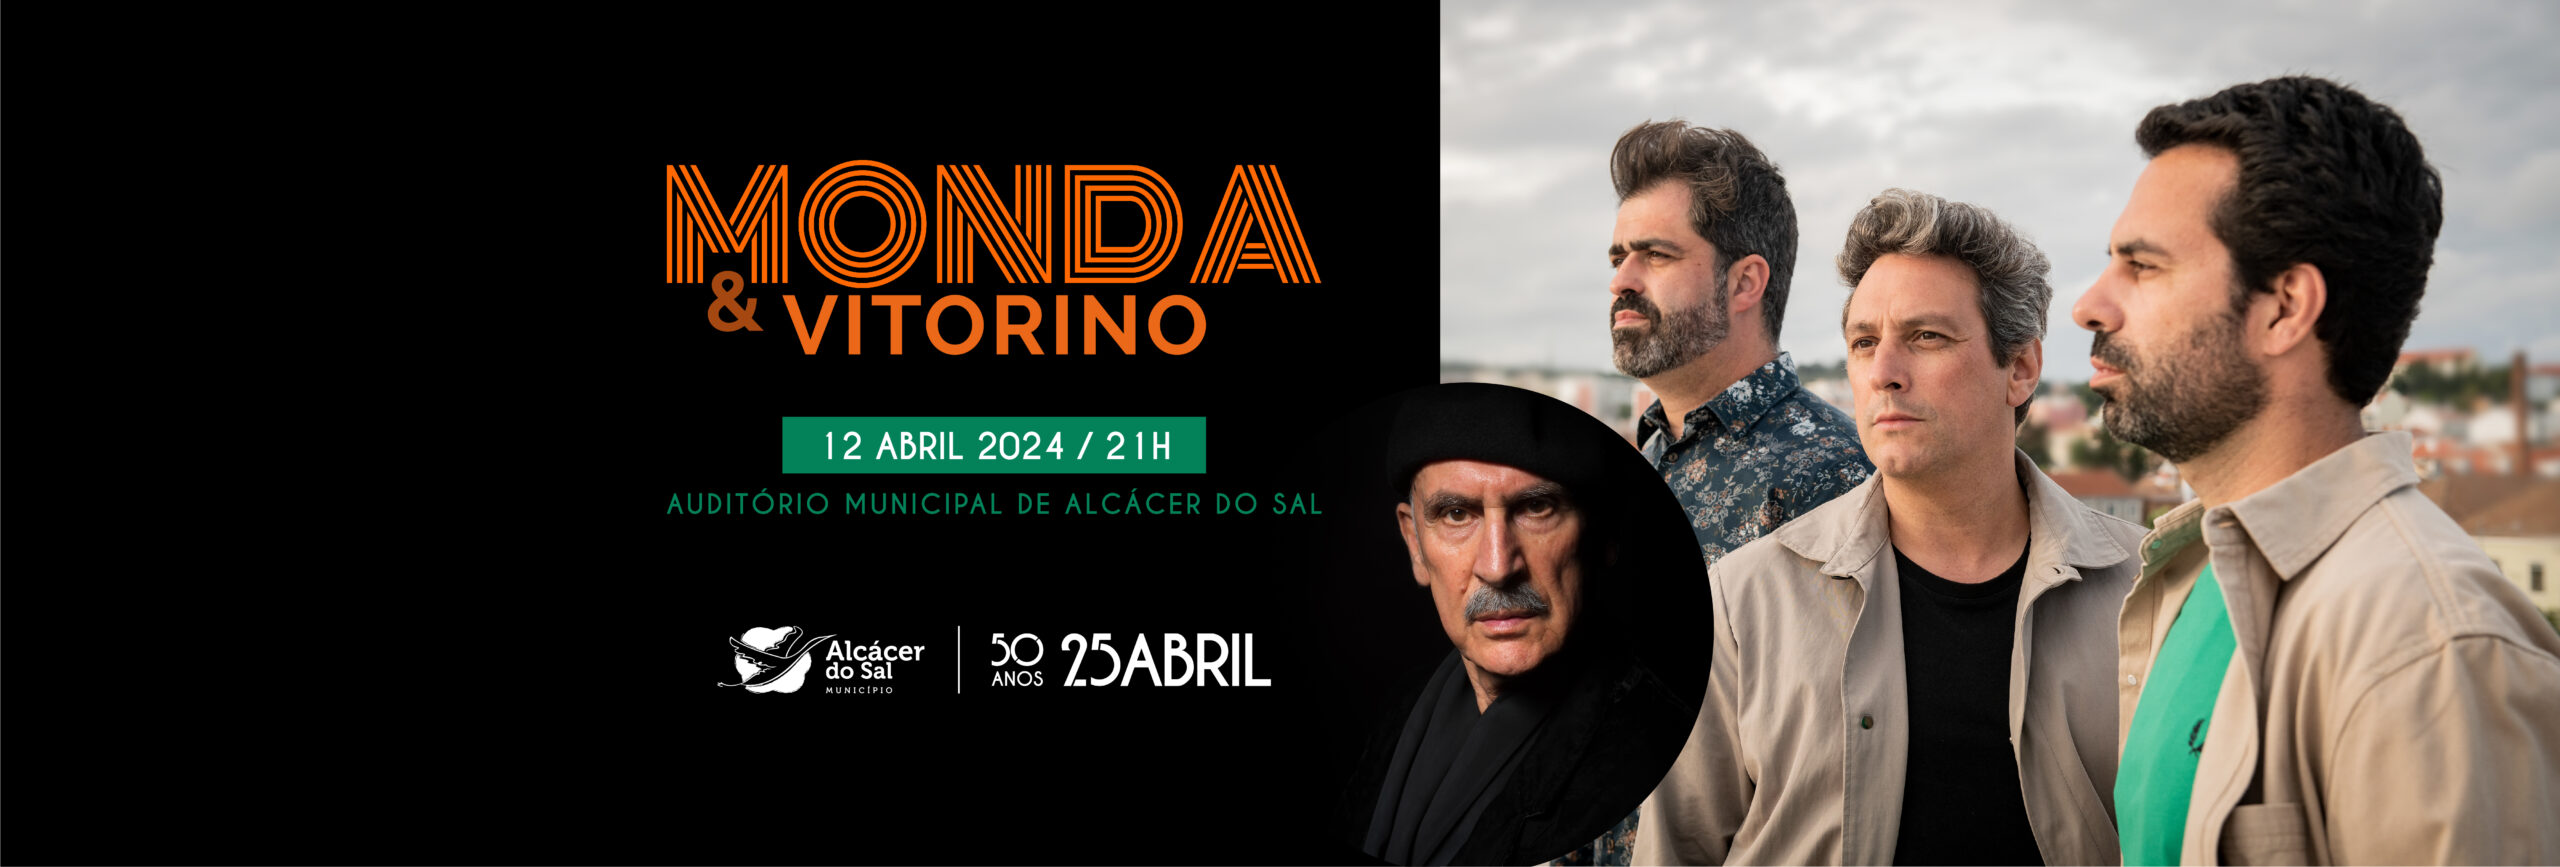 Monda & Vitorino celebram abril no Auditório